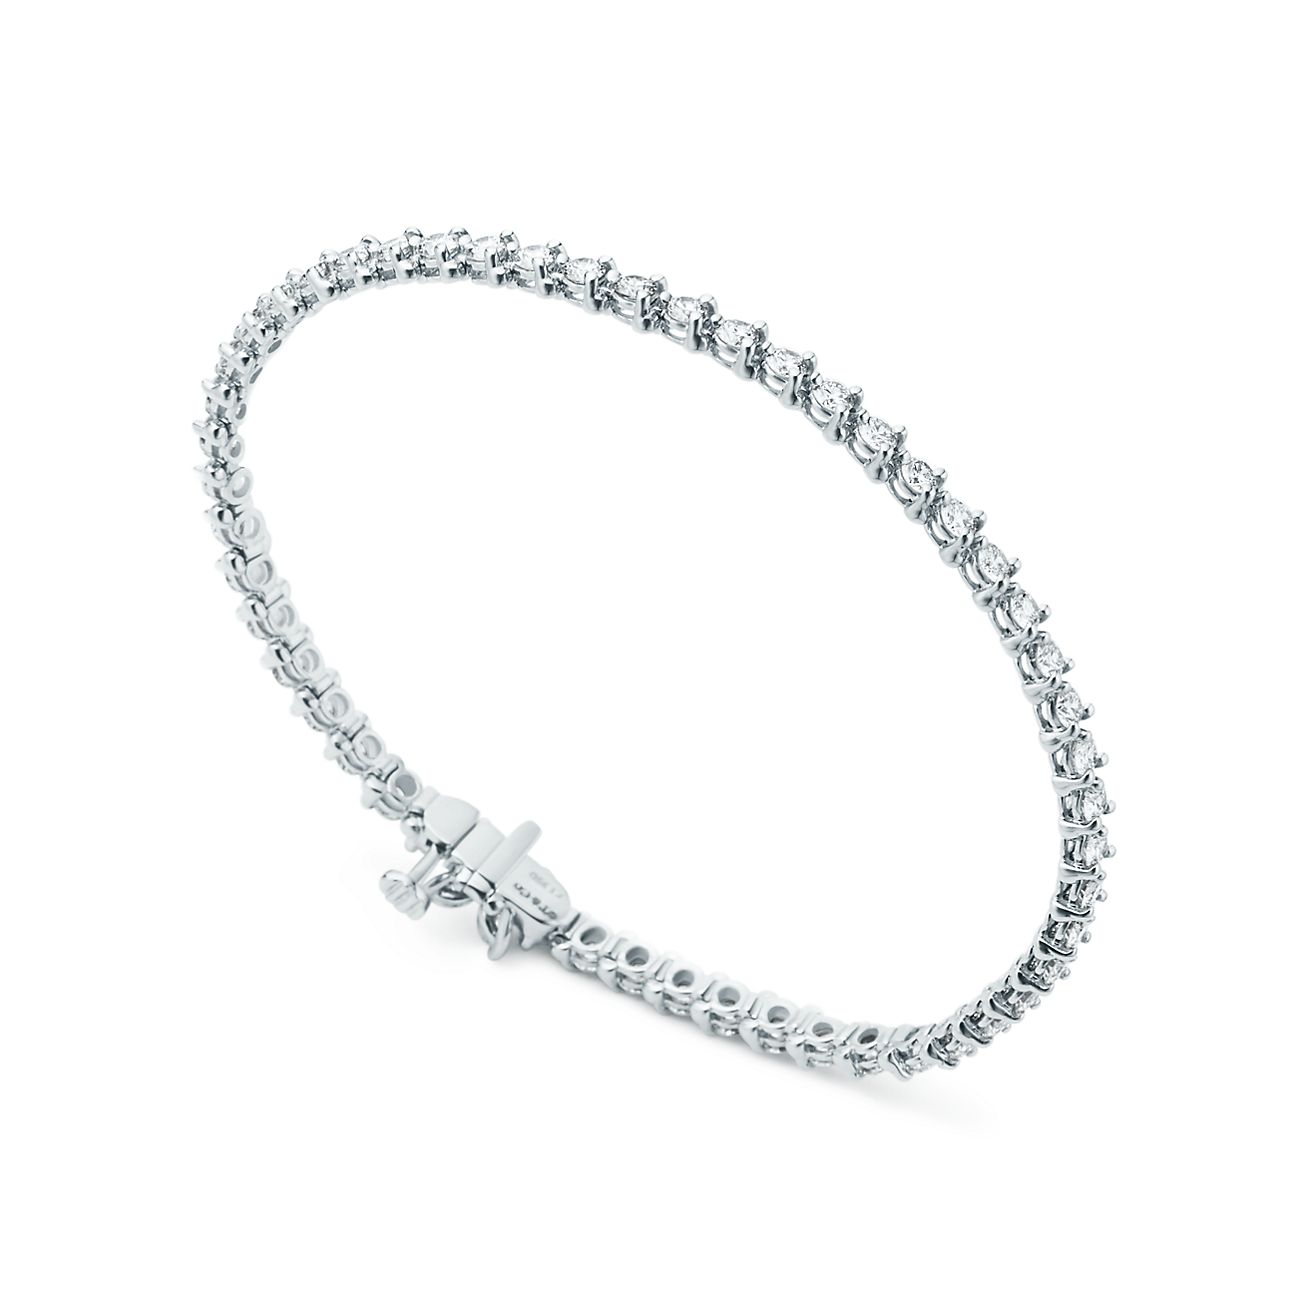 Tiffany  Co 923ct Diamond Platinum Tennis Bracelet  Tennis bracelet  diamond Beautiful jewelry Crazy shoes